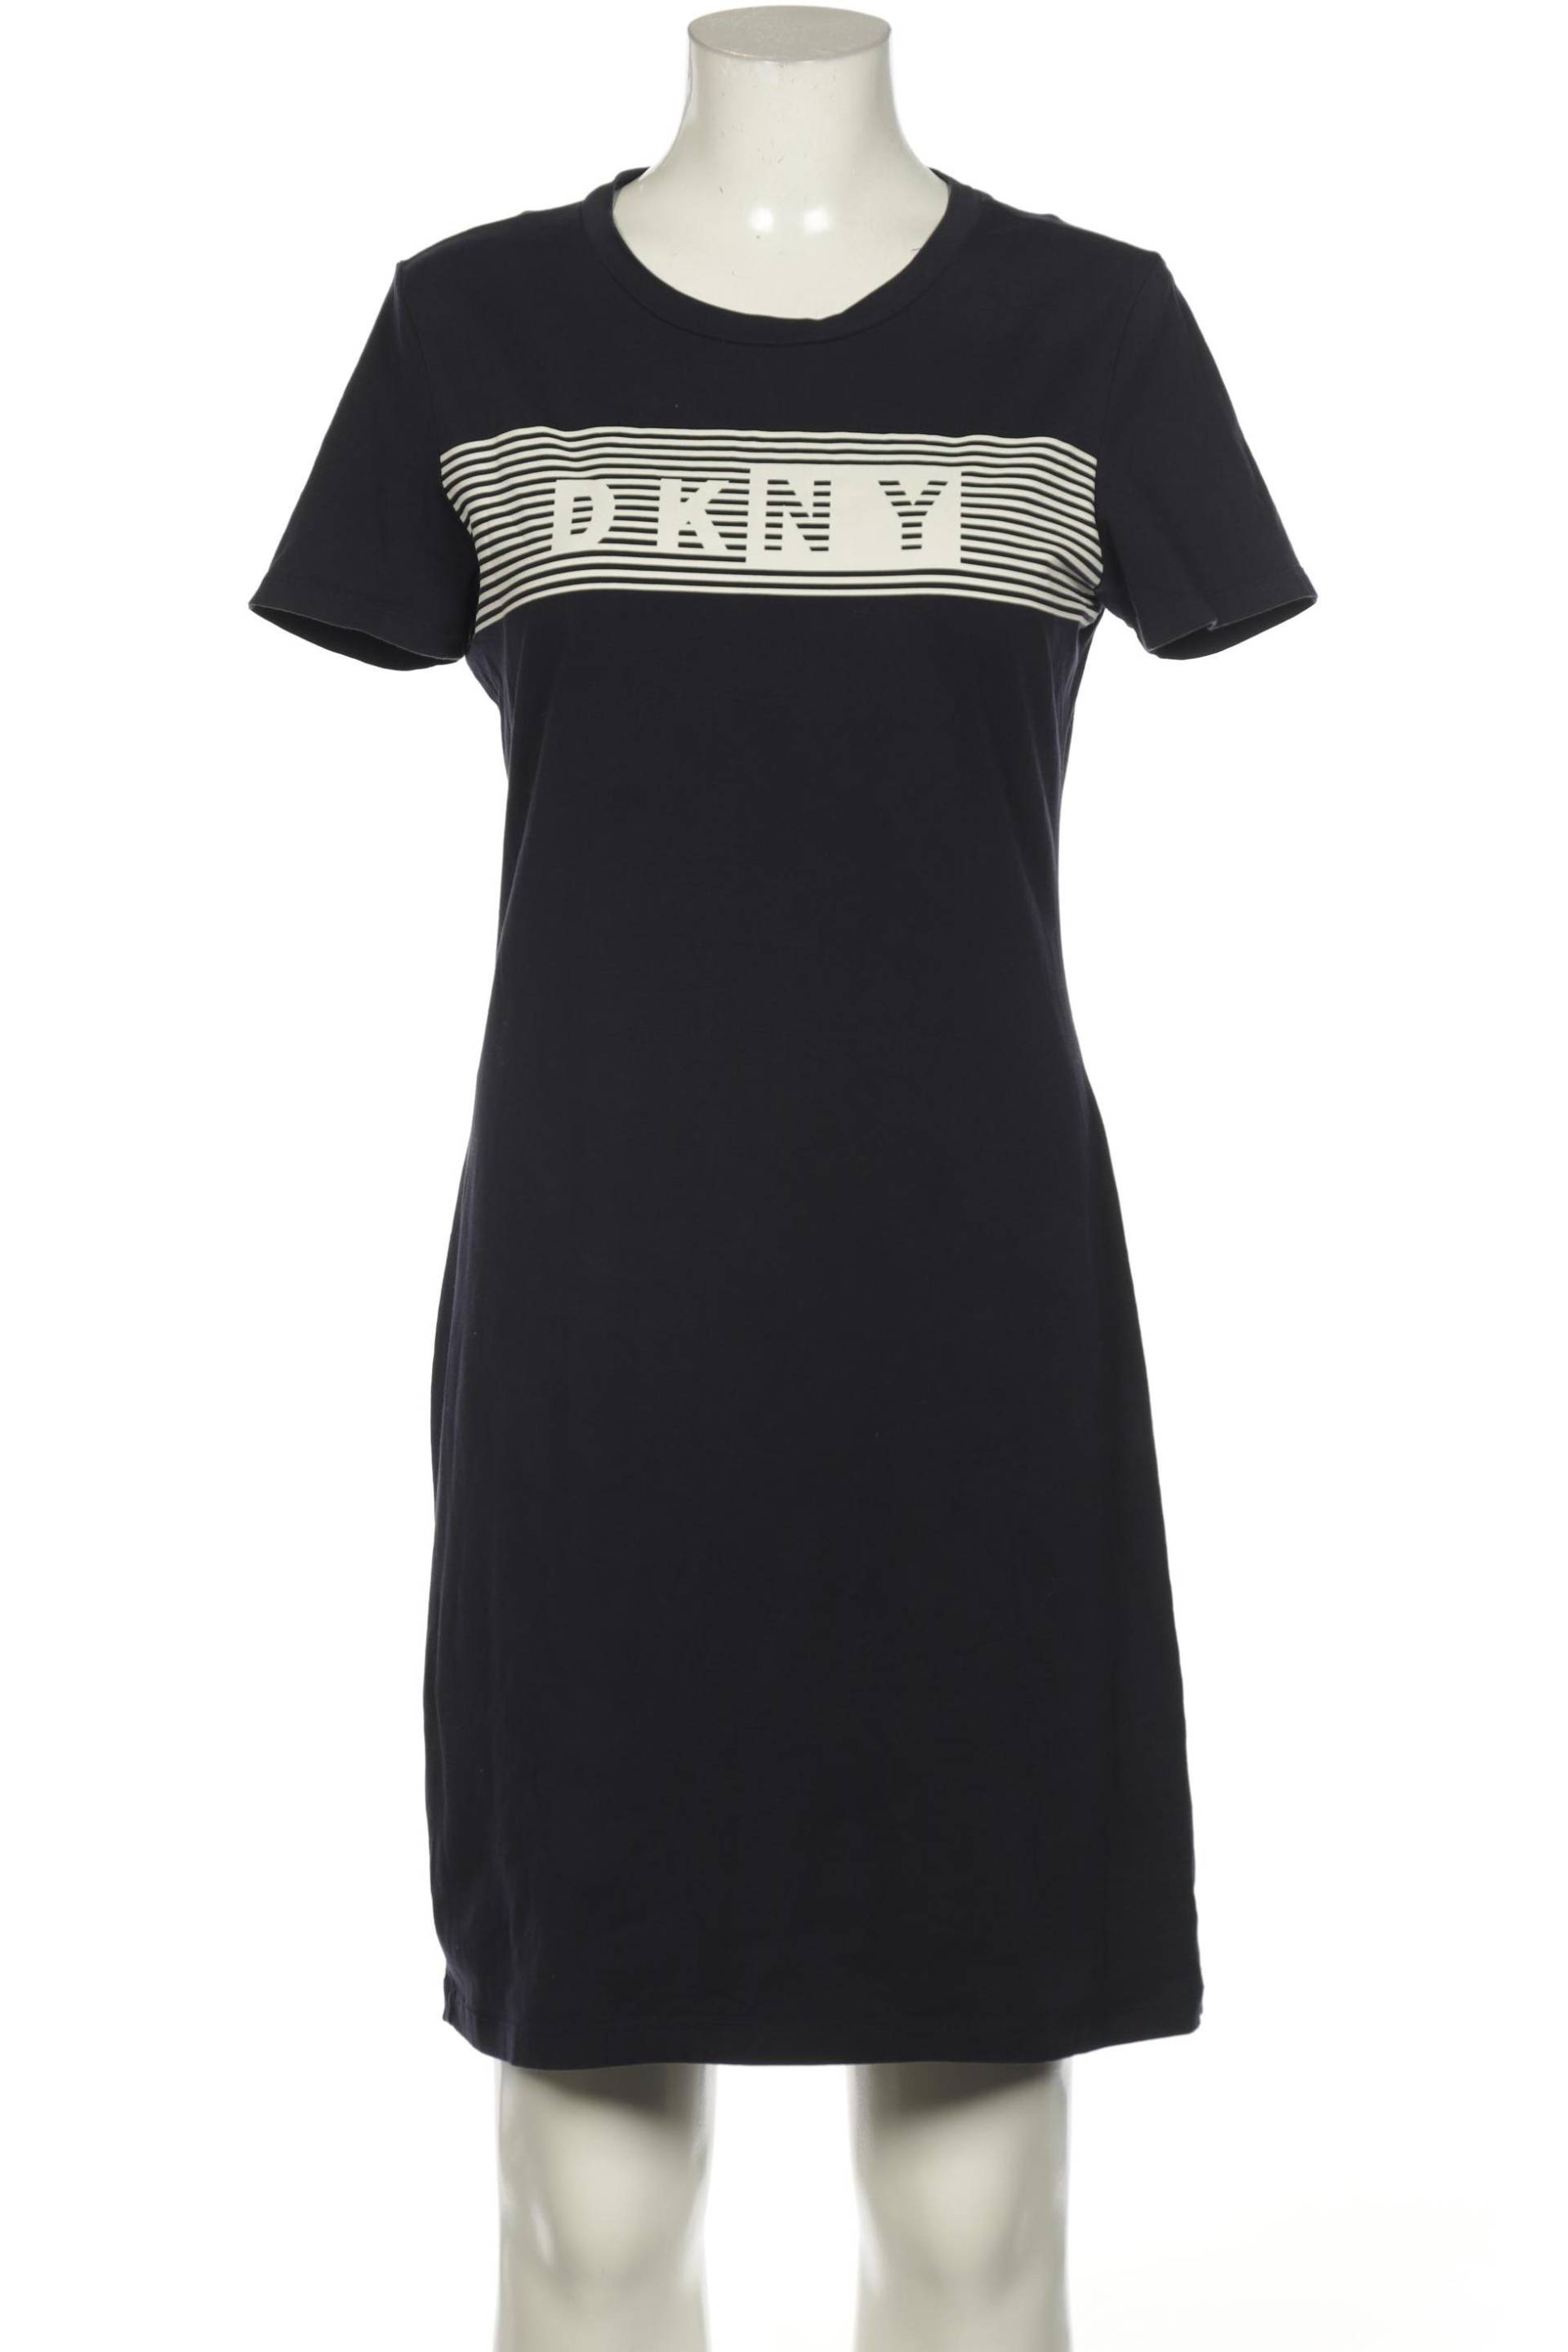 DKNY by Donna Karan New York Damen Kleid, marineblau von DKNY by Donna Karan New York